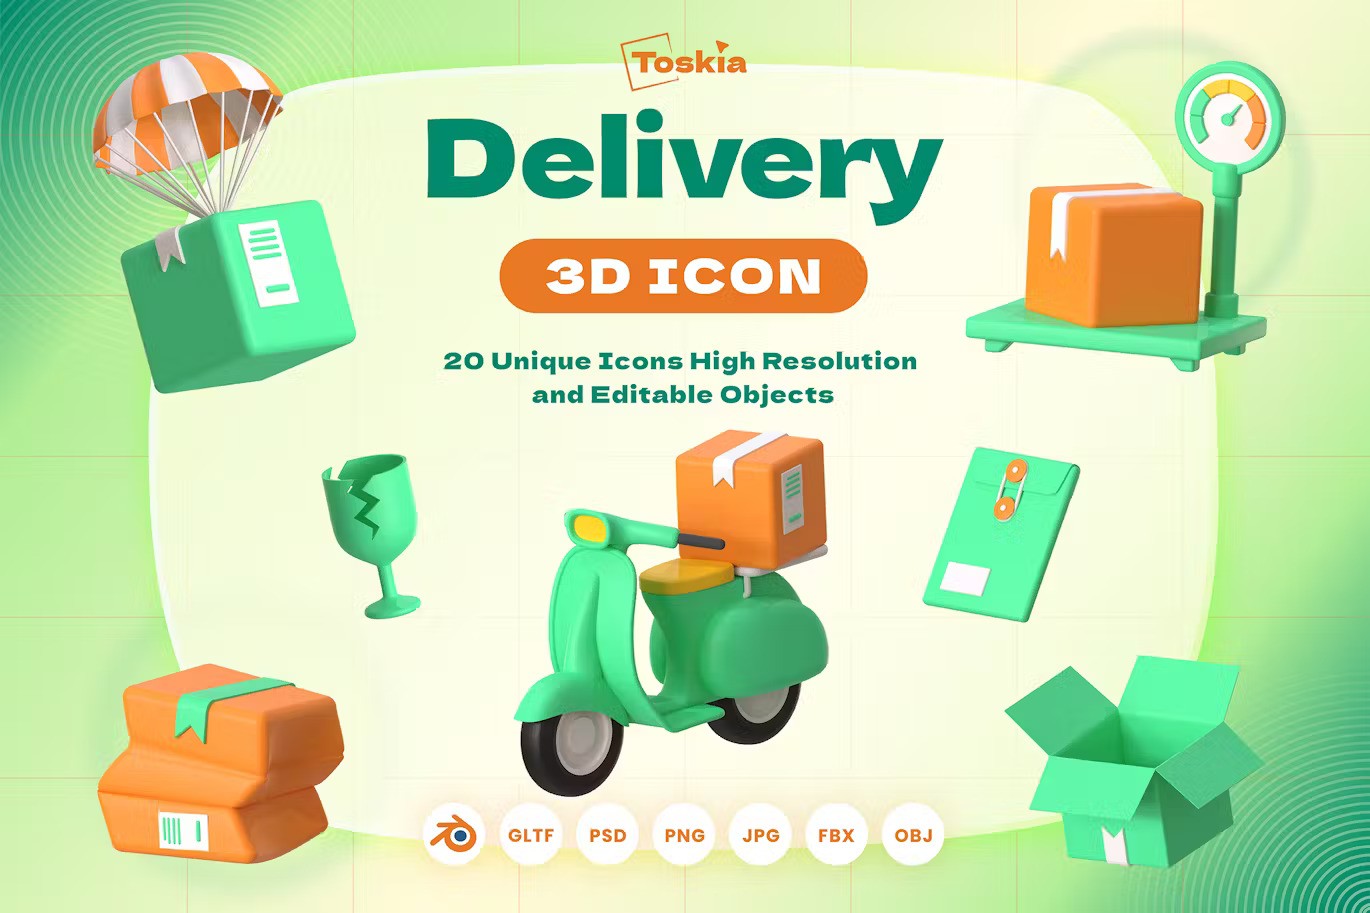 快递行业 3D 图标合集 Delivery 3D Icon